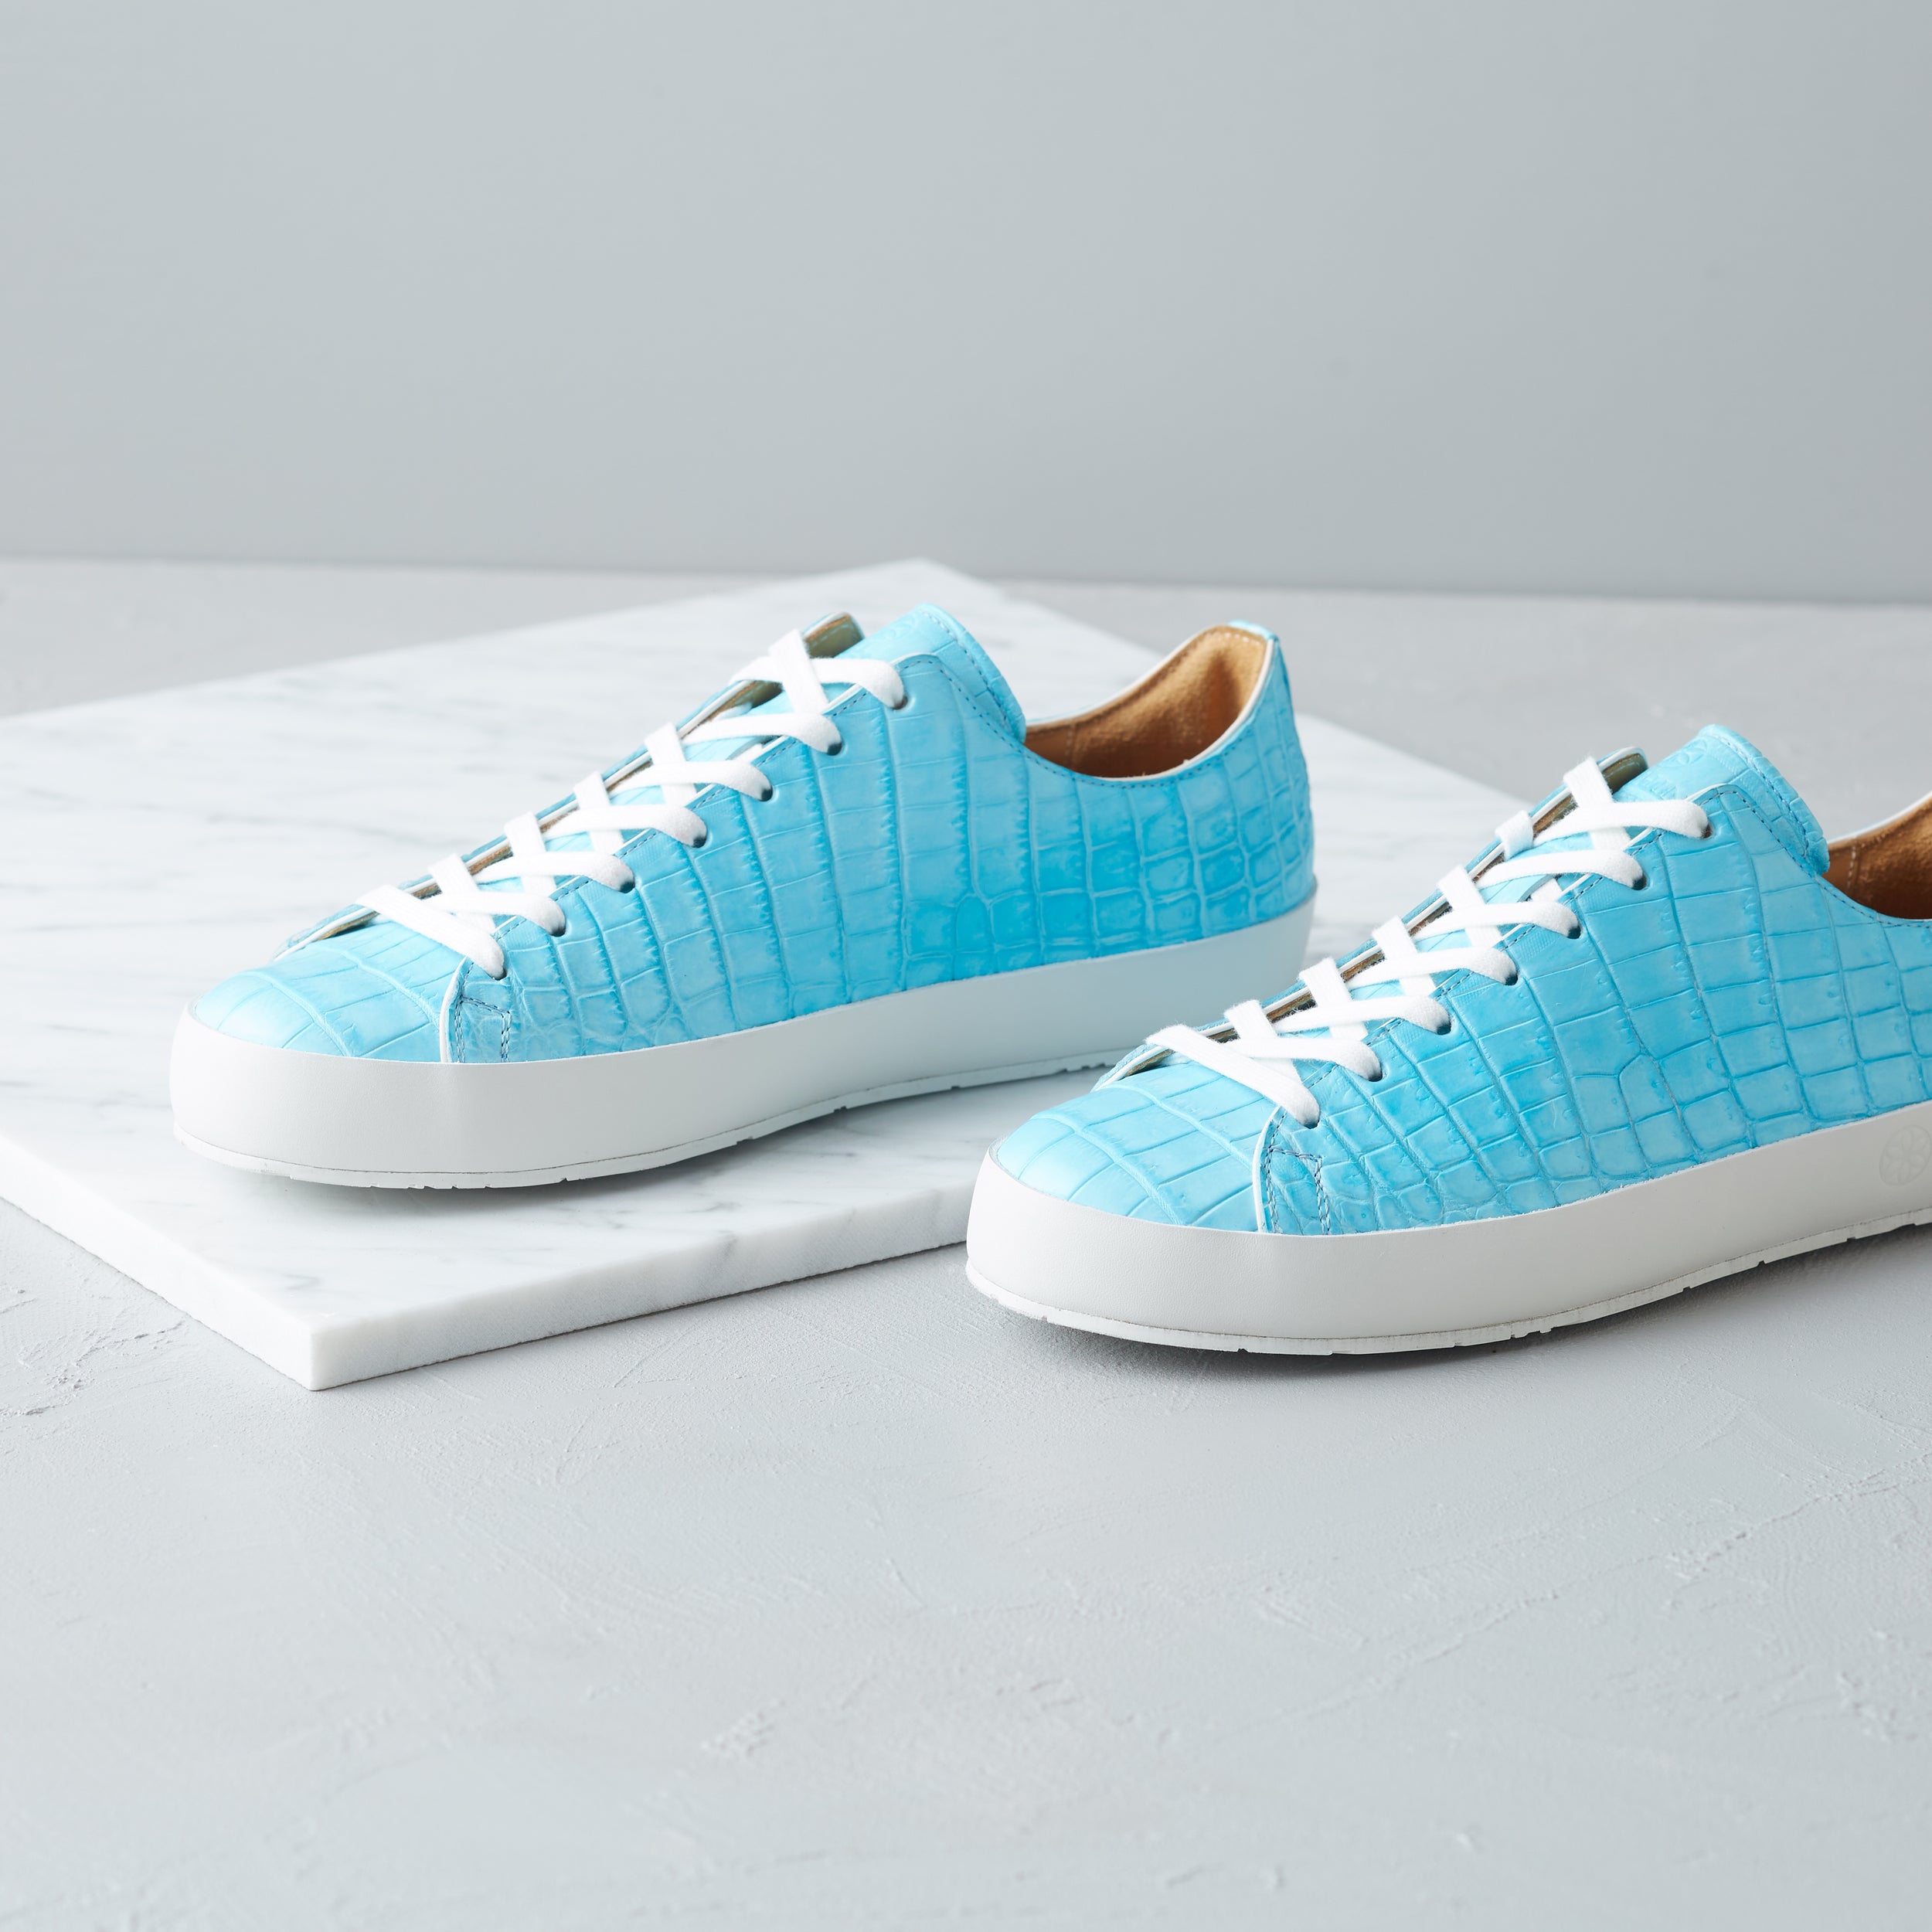 [women's] Liberte - low-top sneakers - Tiffany blue patina crocodile